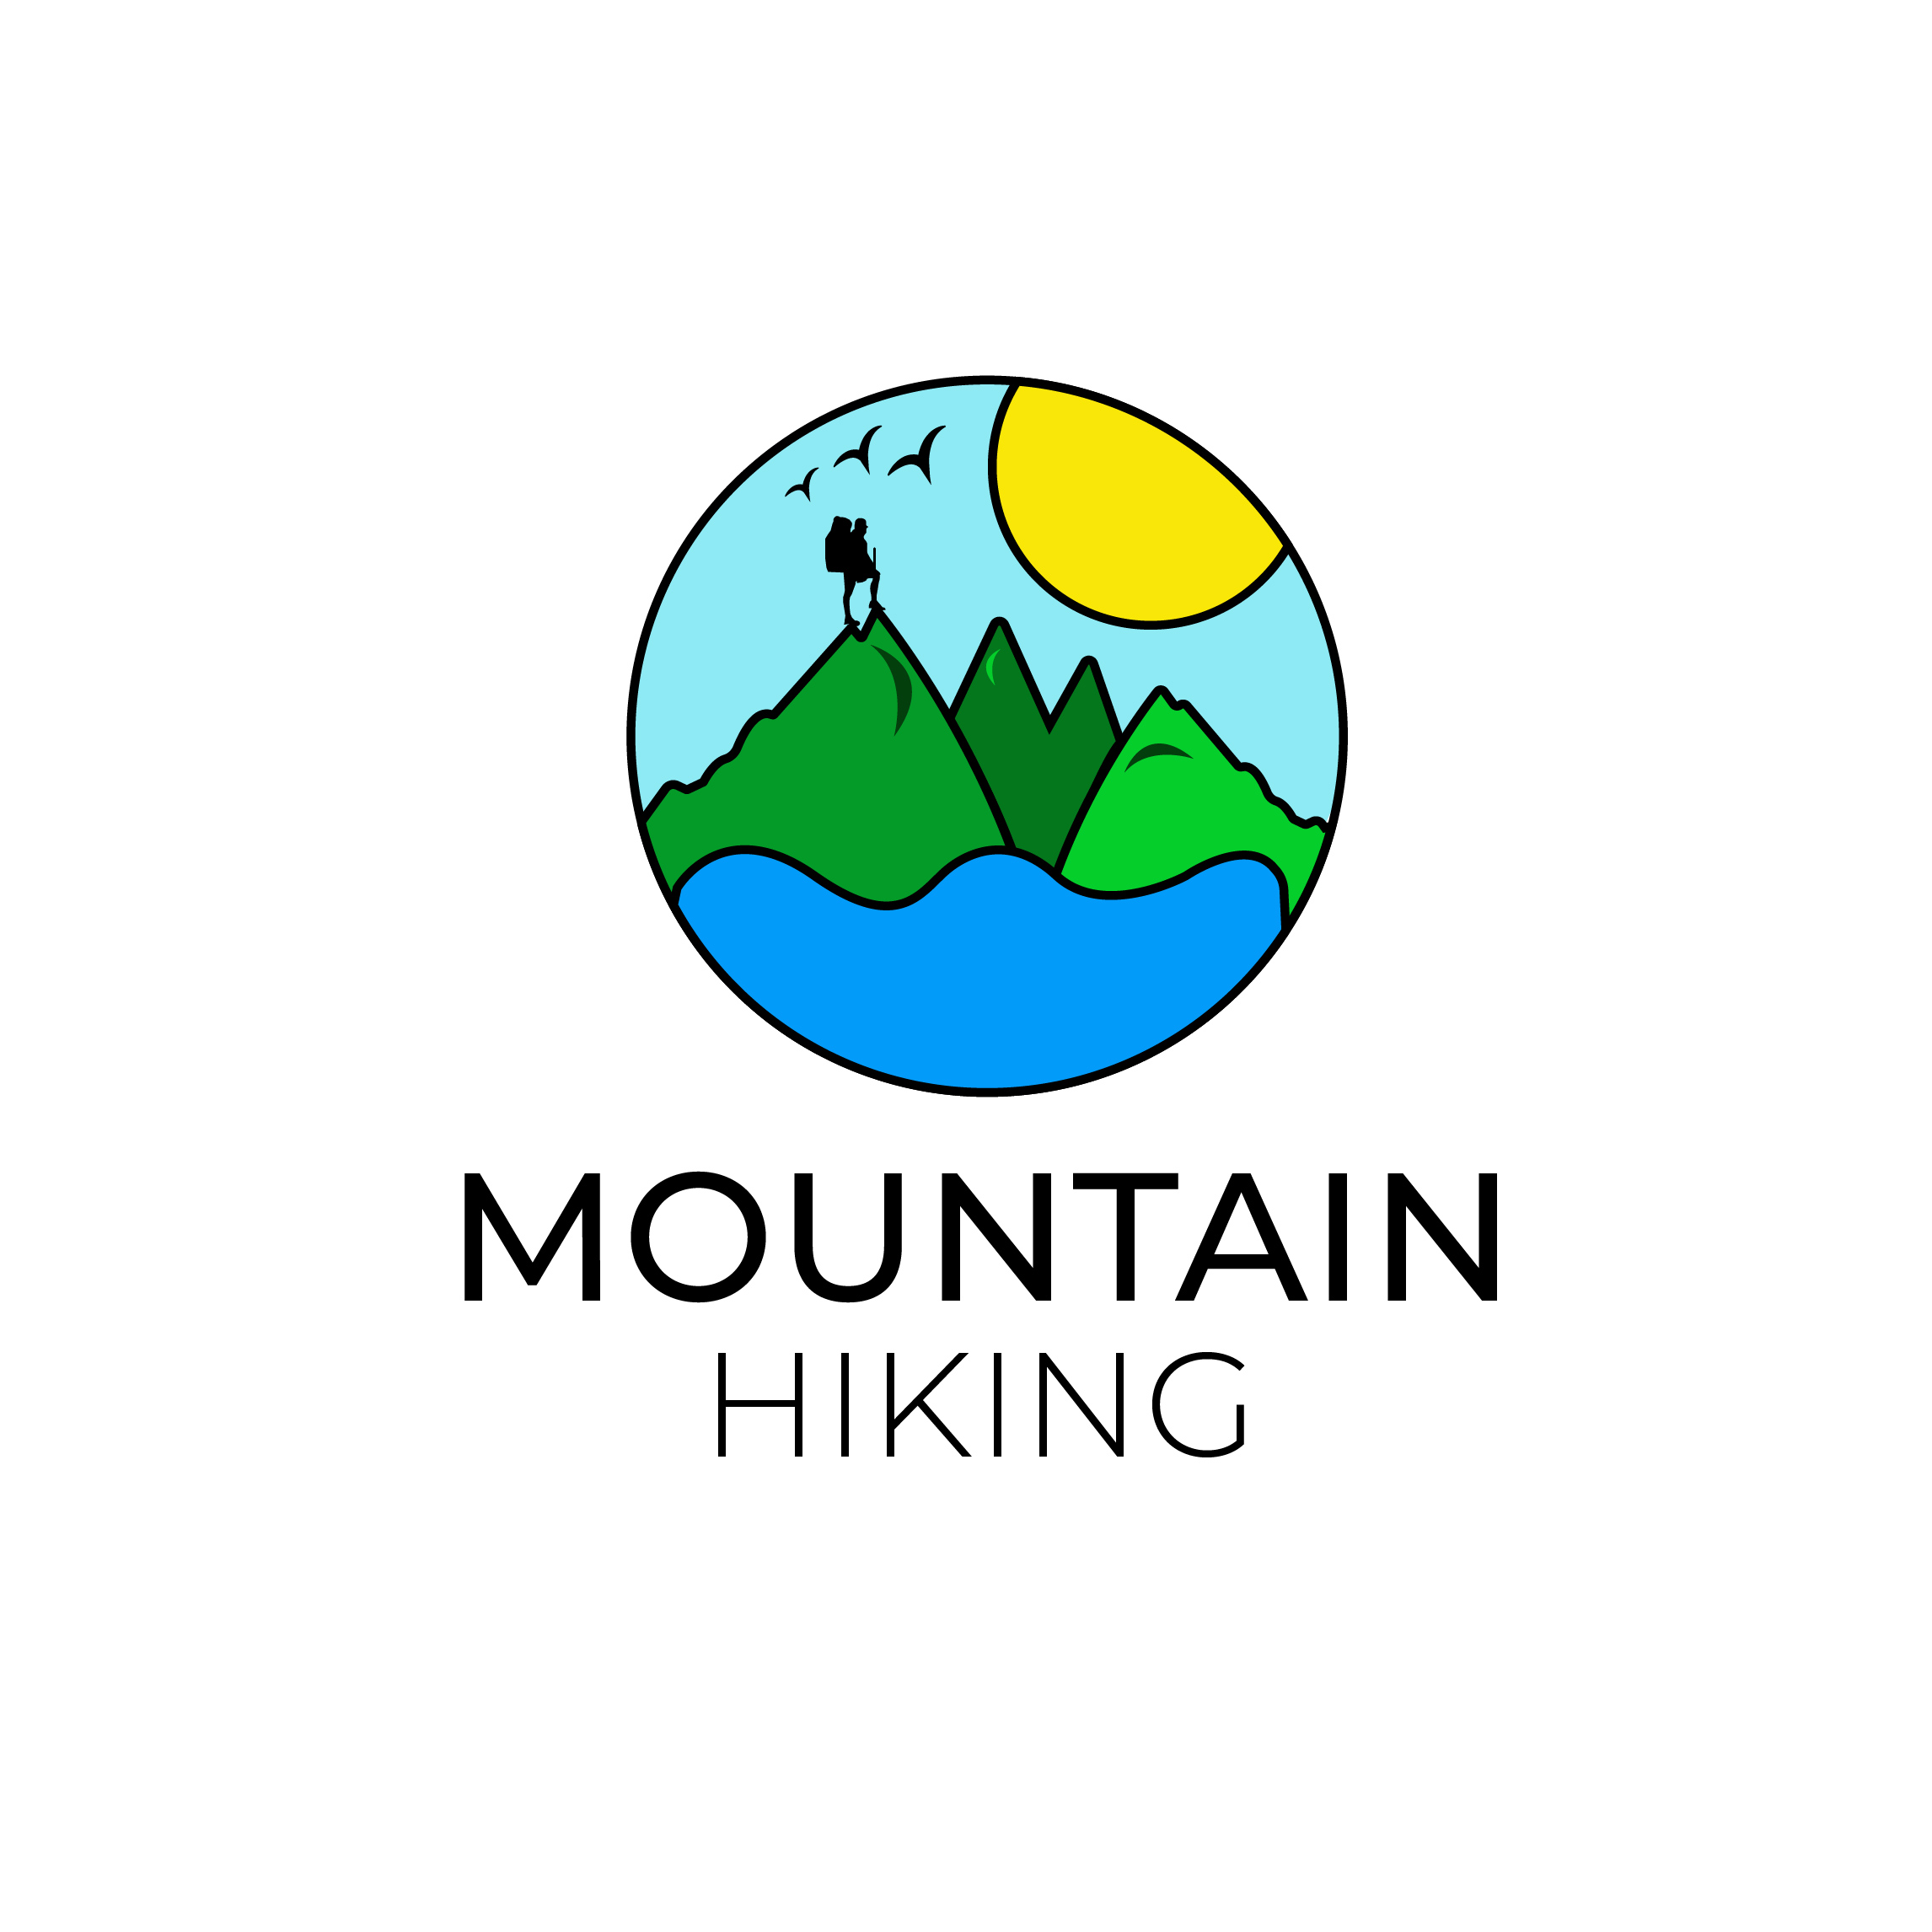 mountain hiking logo 01 01 01